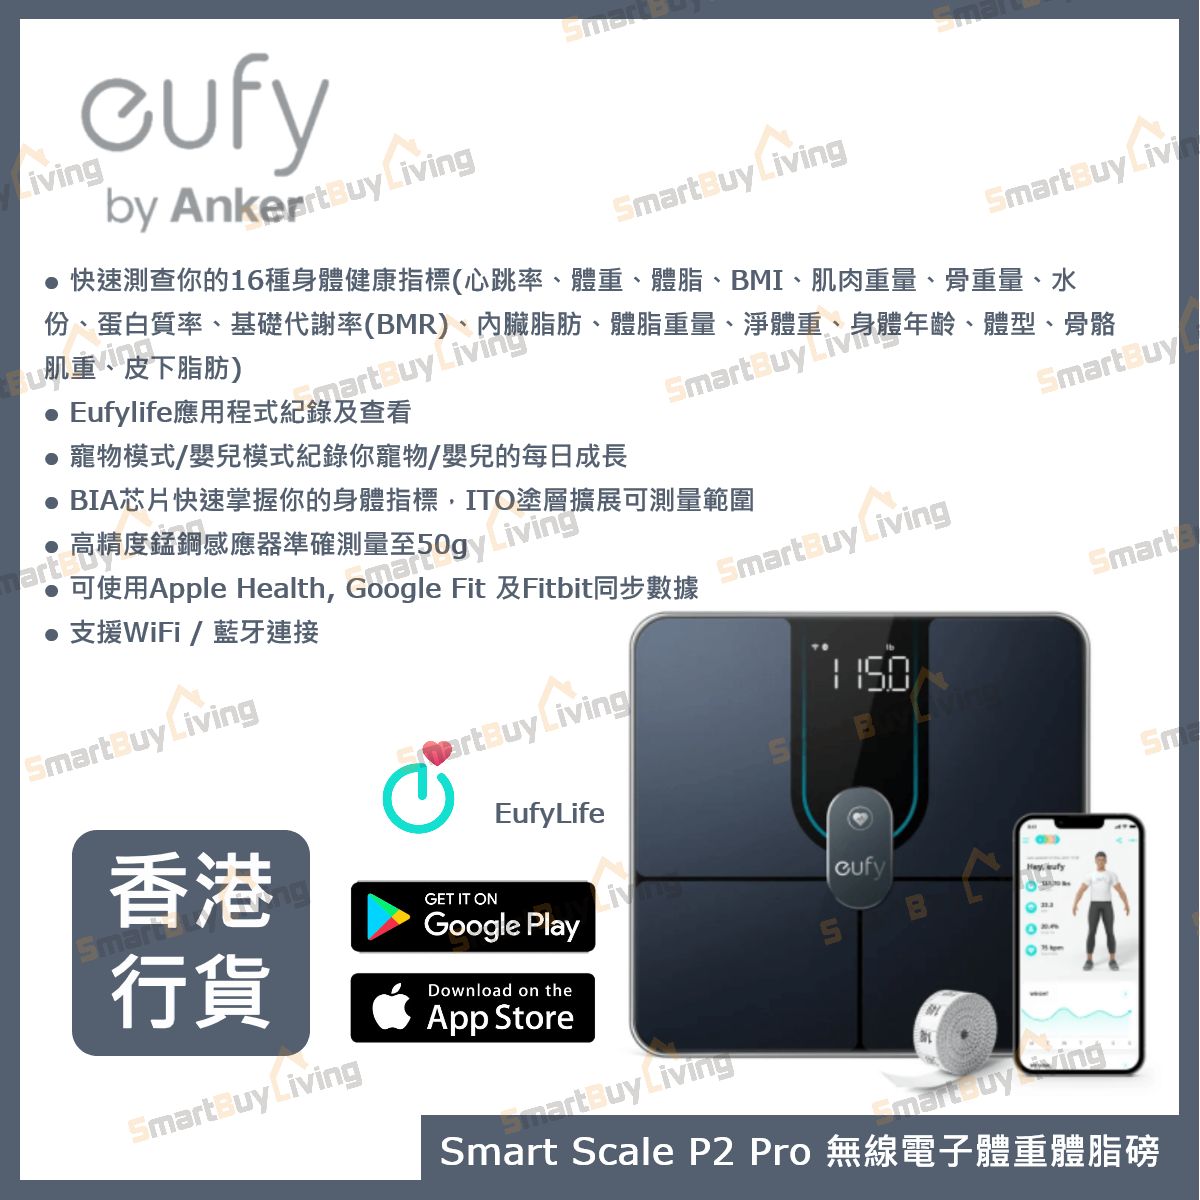 eufy | Anker Eufy (by ) Smart Scale P2 Pro 無線電子體重體脂磅黑色 